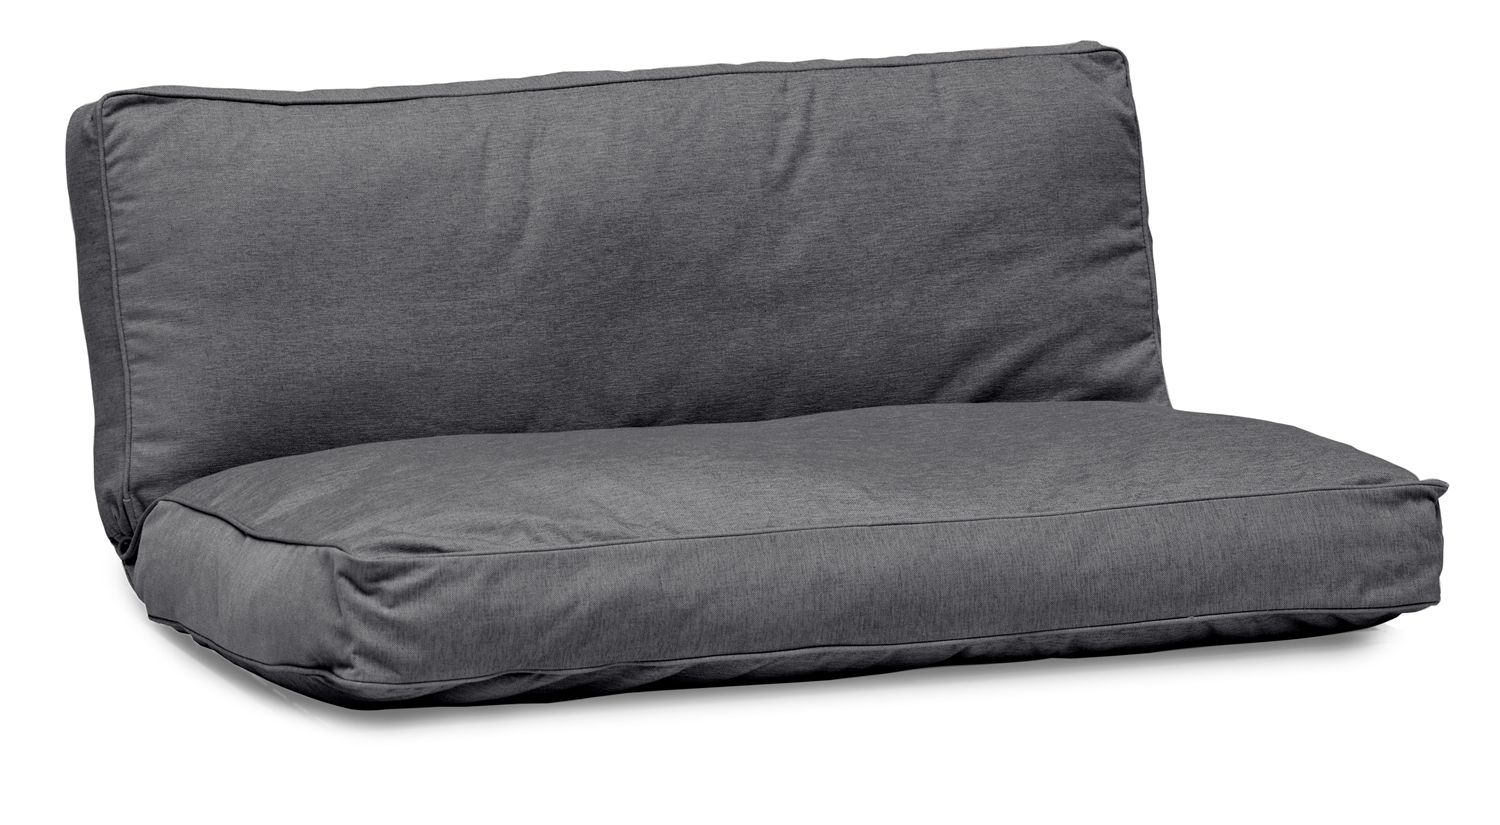 Bara Vara Sesselauflage grau-meliert, 11 cm dicke Polsterauflage für Lounge-Sessel